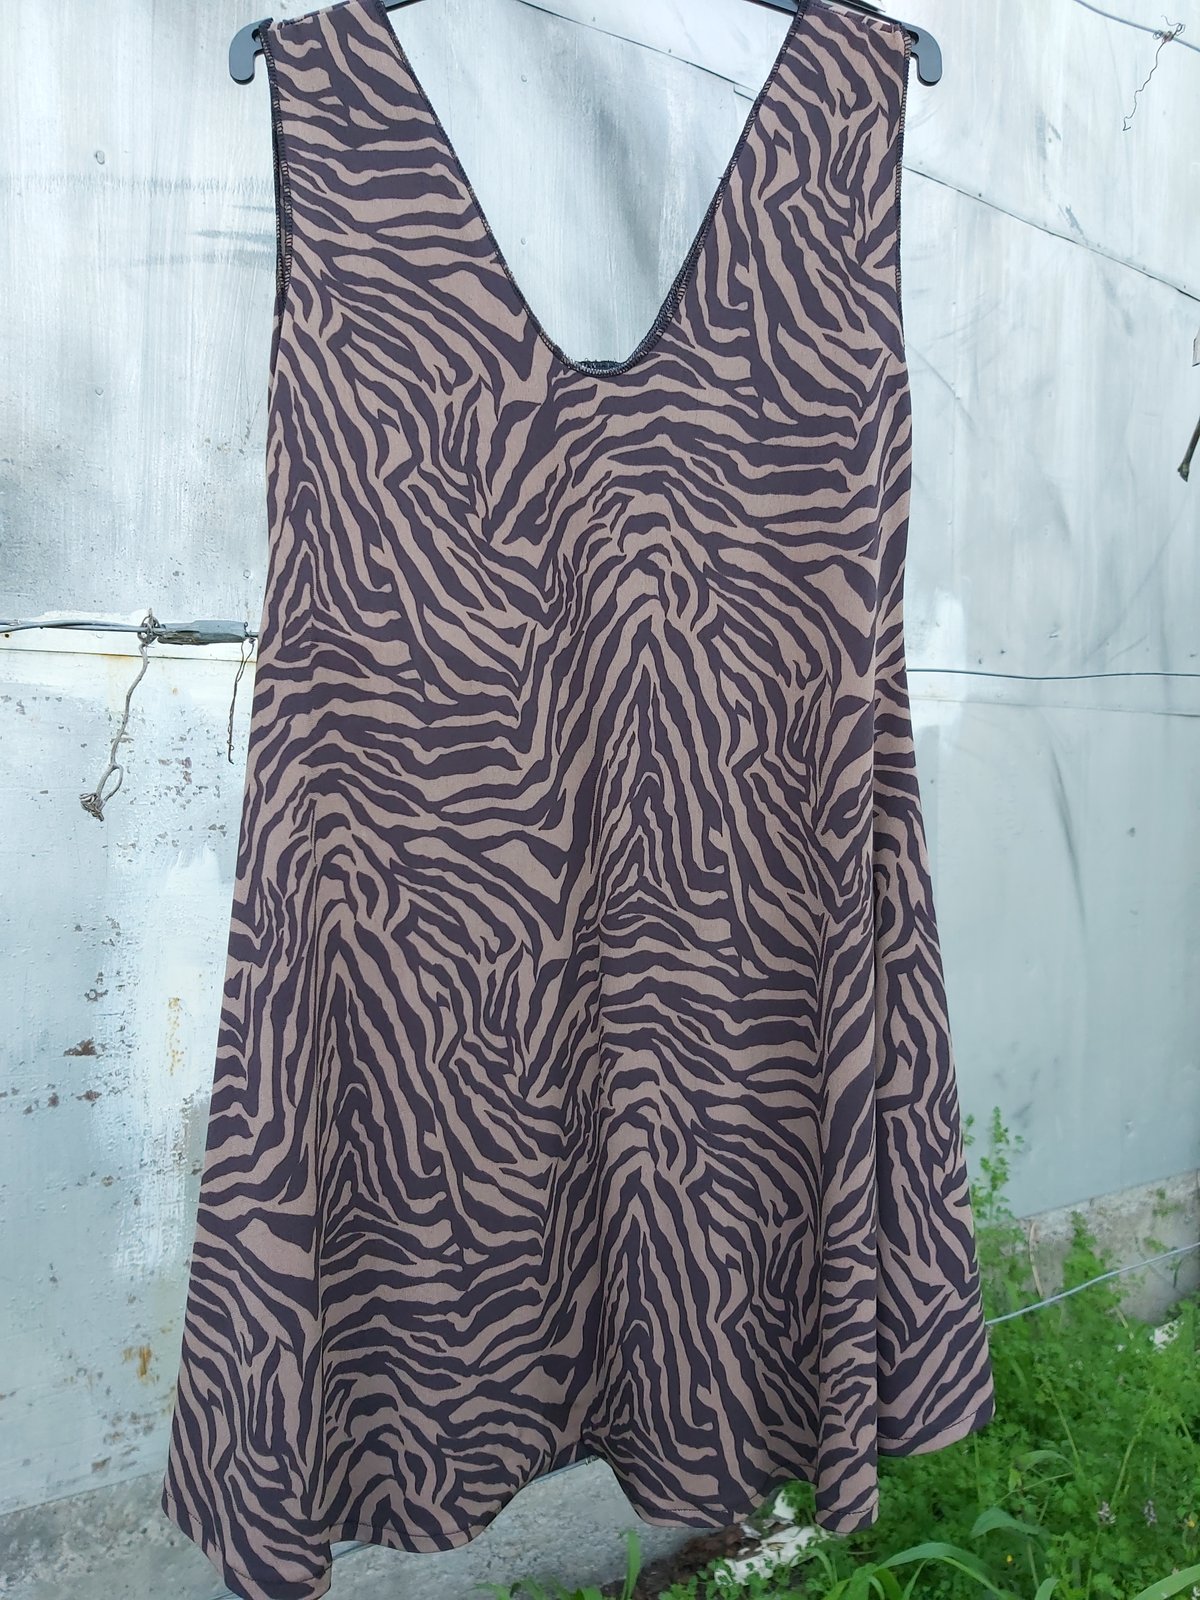 Image of KAT Swing Top/Dress - Brown zebra